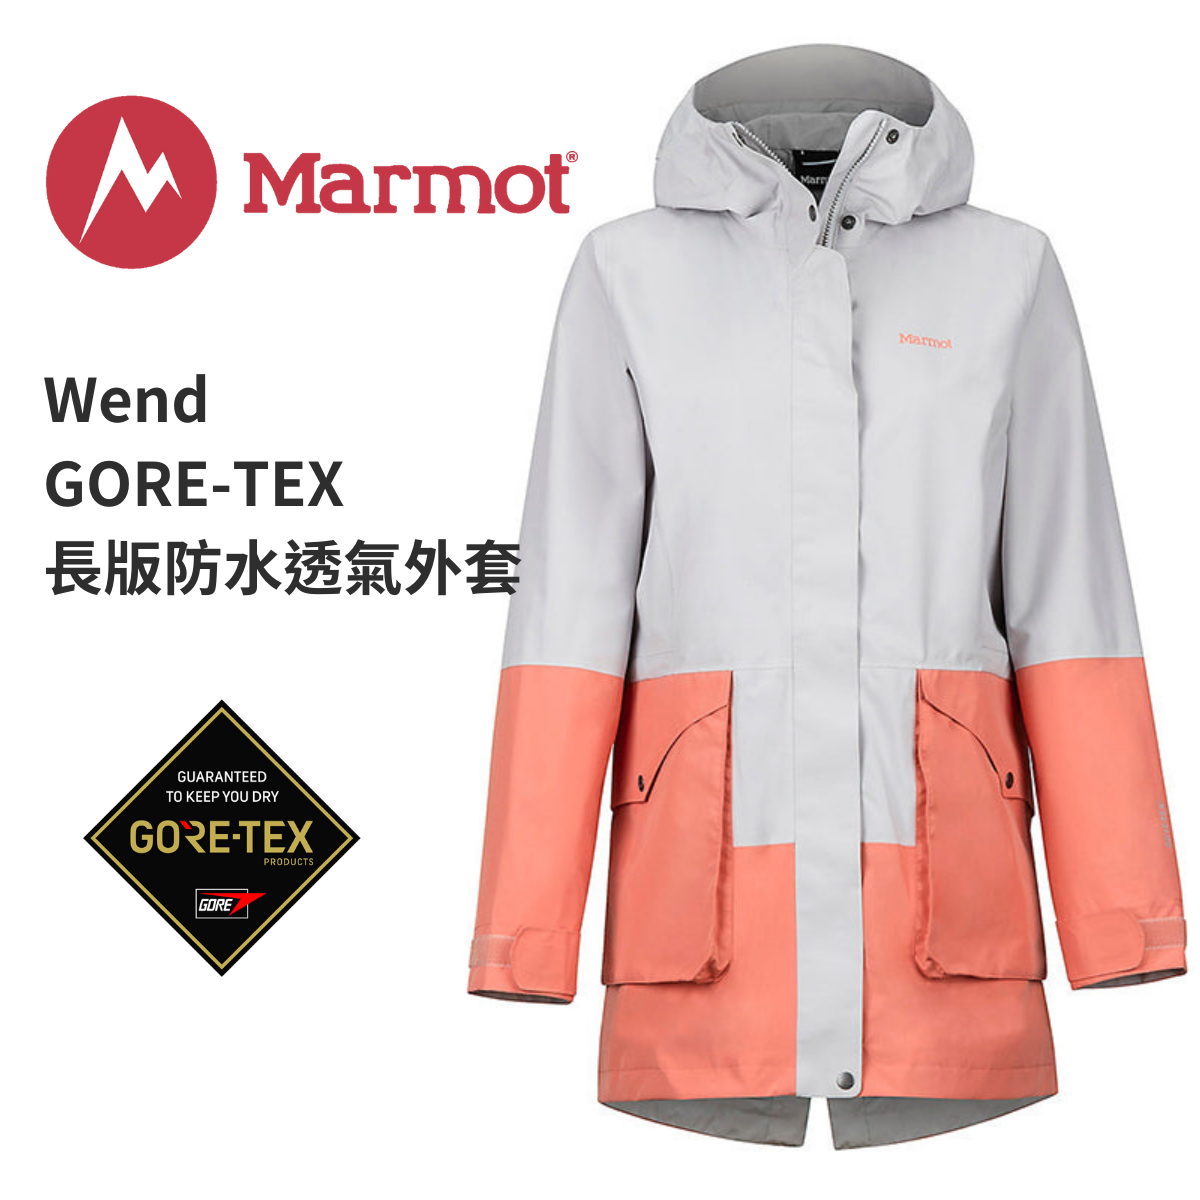 【Marmot】Wend 女 GORE-TEX 長版防水透氣外套